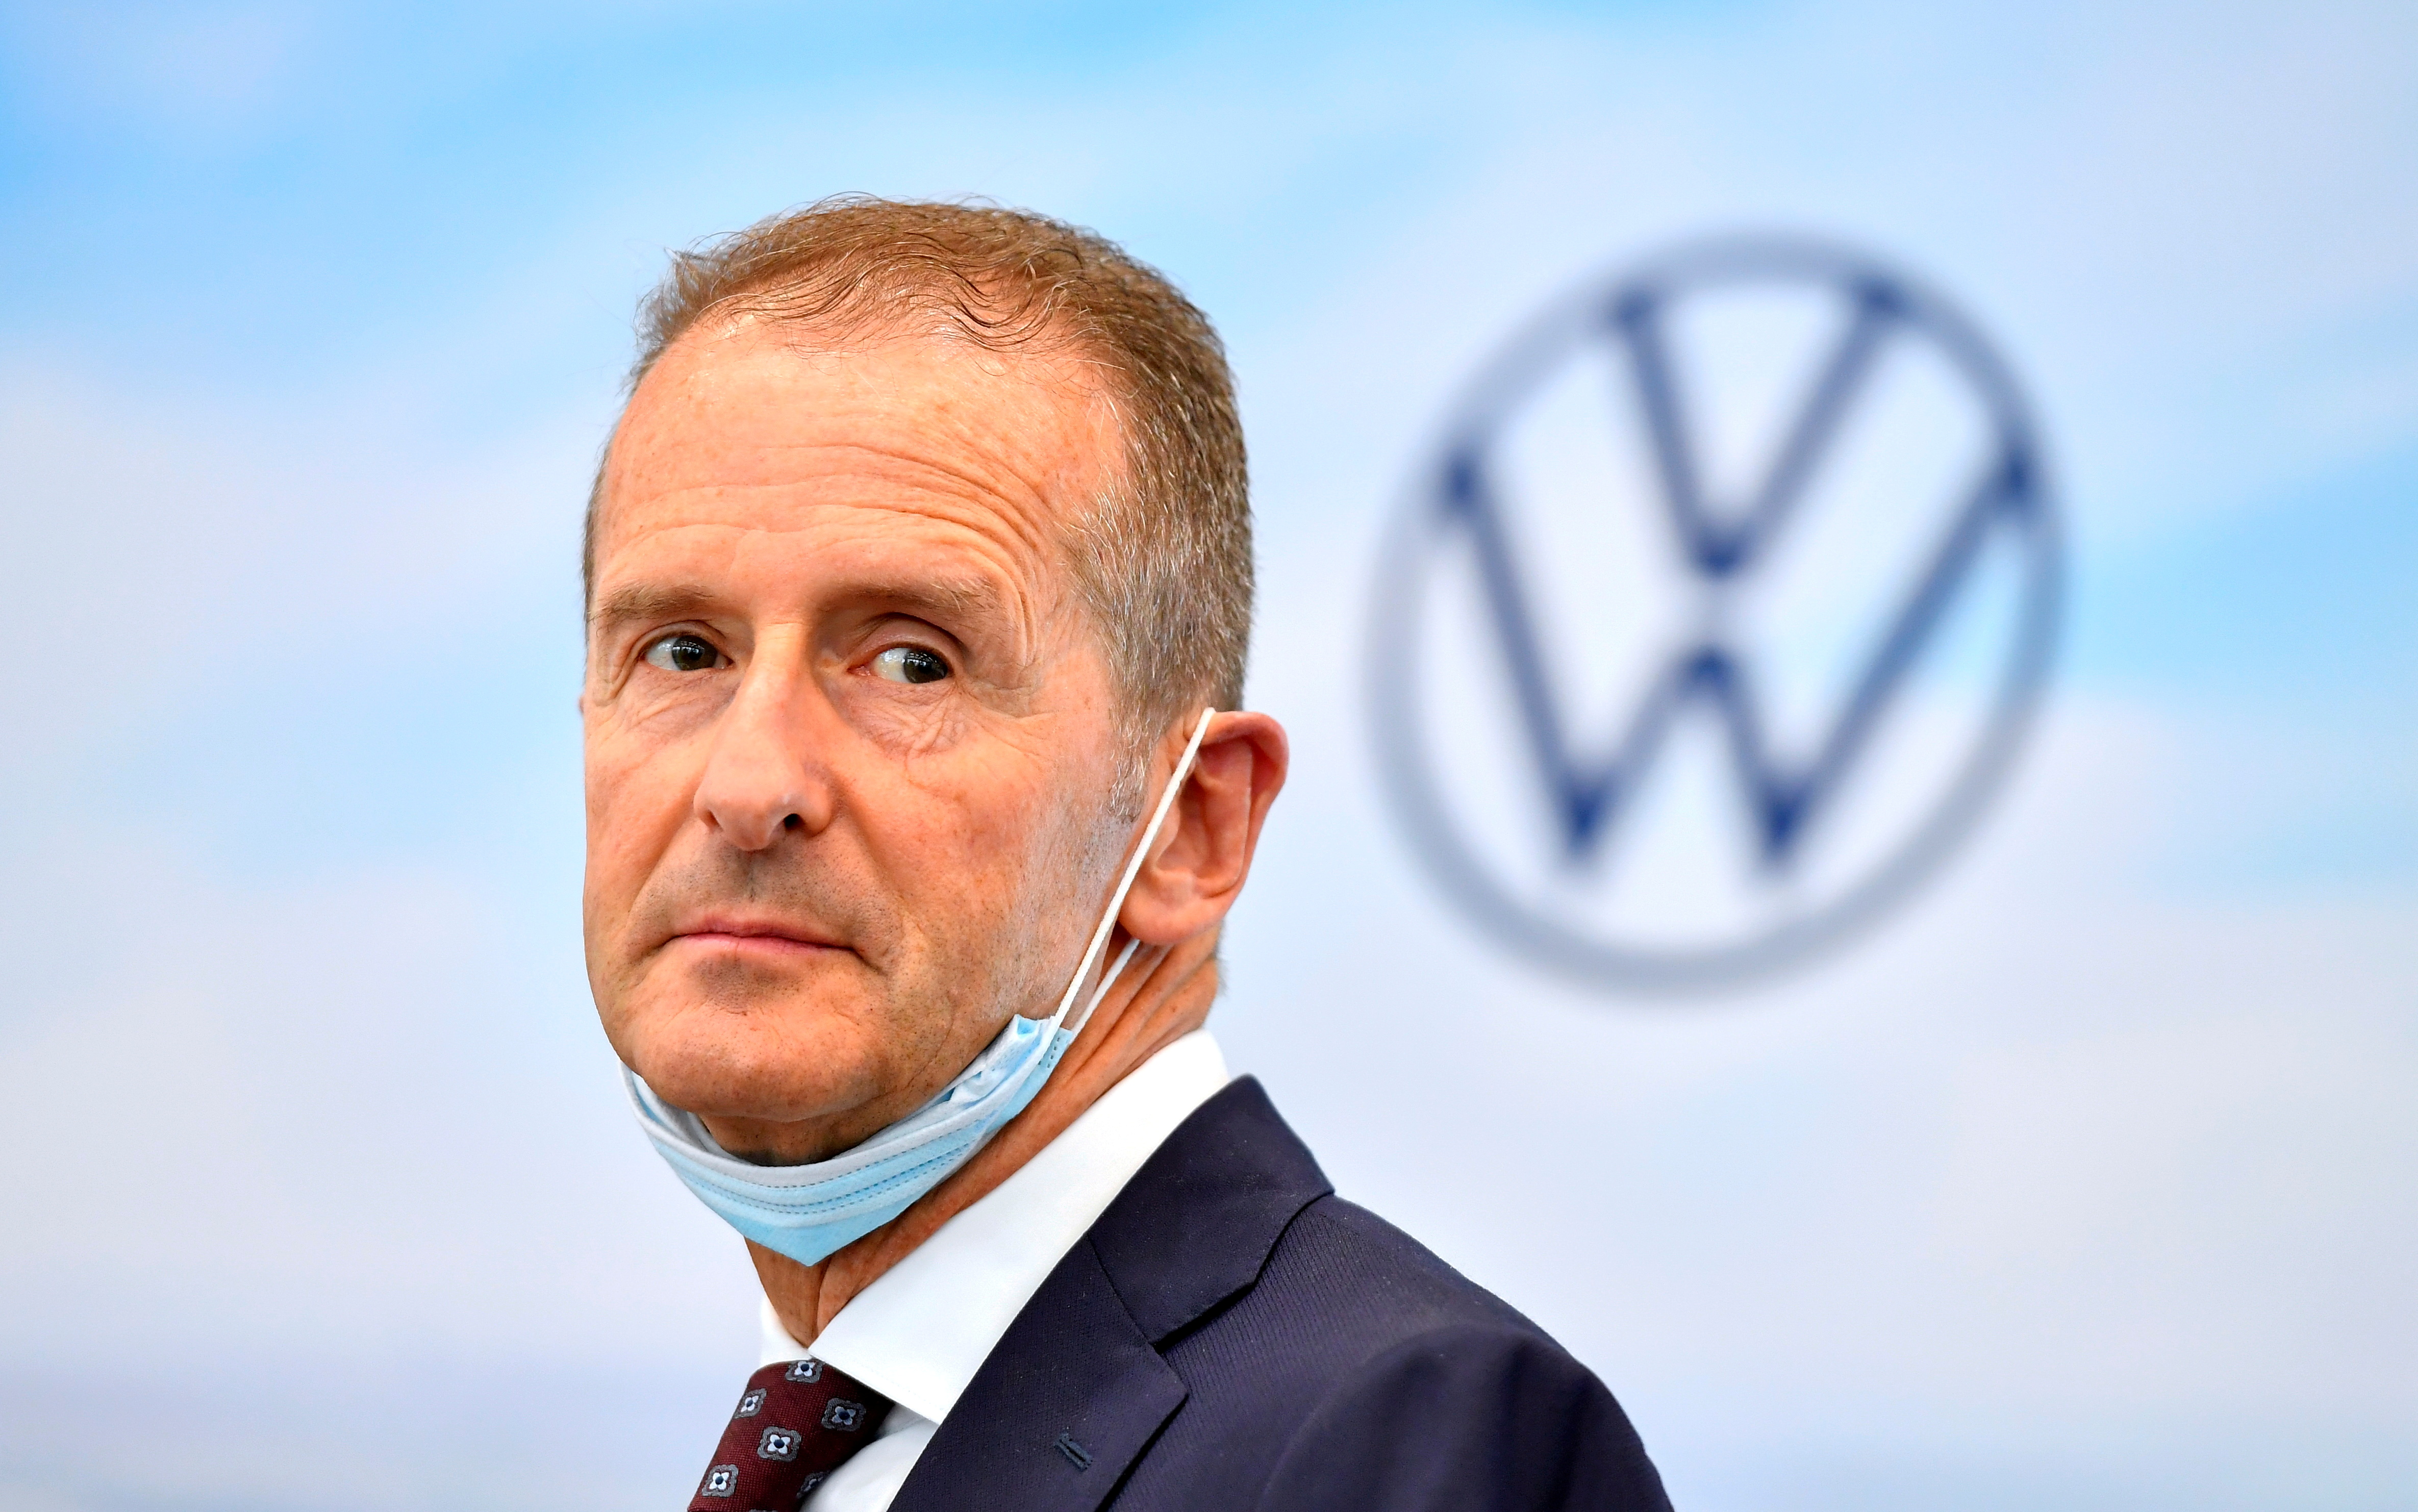 Volkswagen CEO Herbert Diess looks on during his visit to Volkswagen's electric car plant in Zwickau, Germany, June 23, 2021. REUTERS/Matthias Rietschel/File Photo